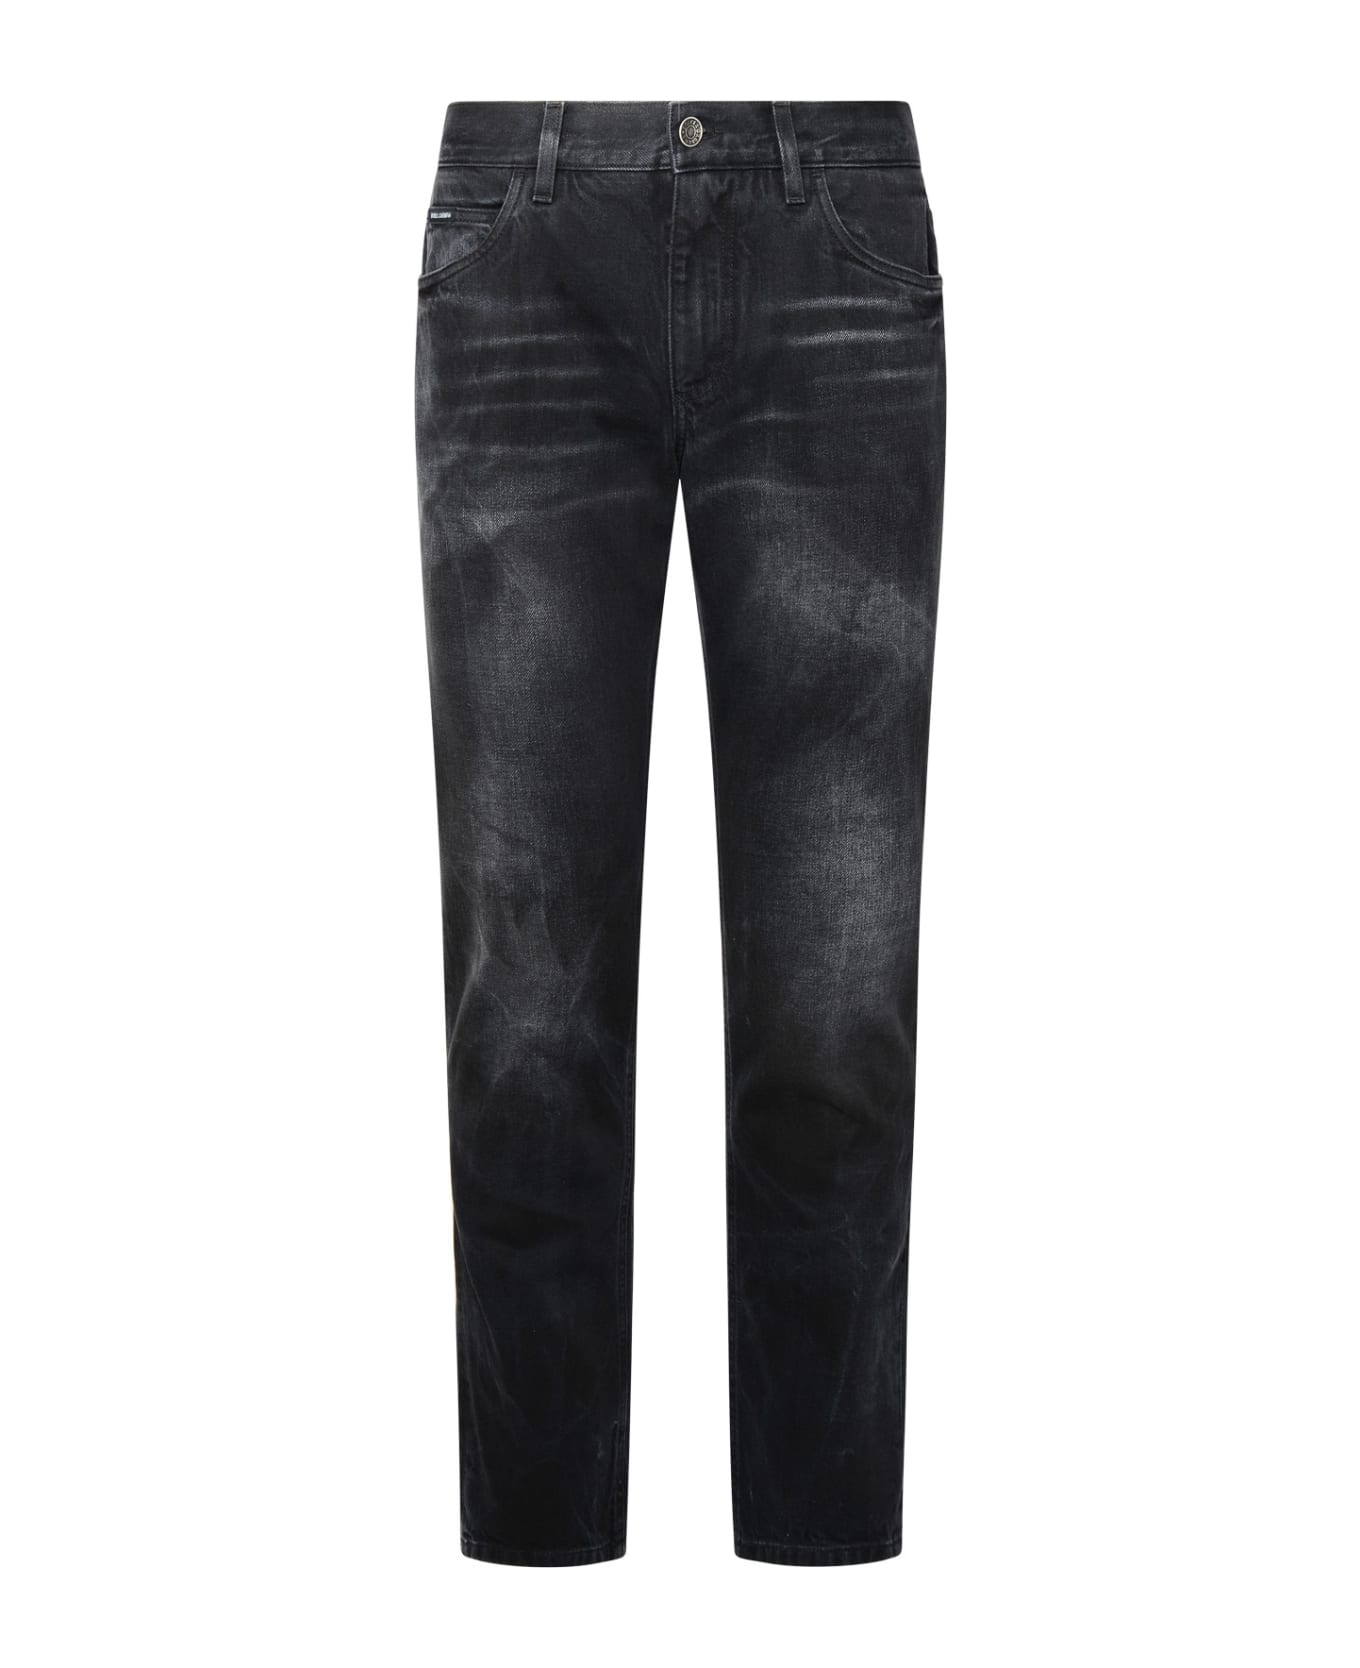 Dolce & Gabbana Black Cotton Jeans - Black